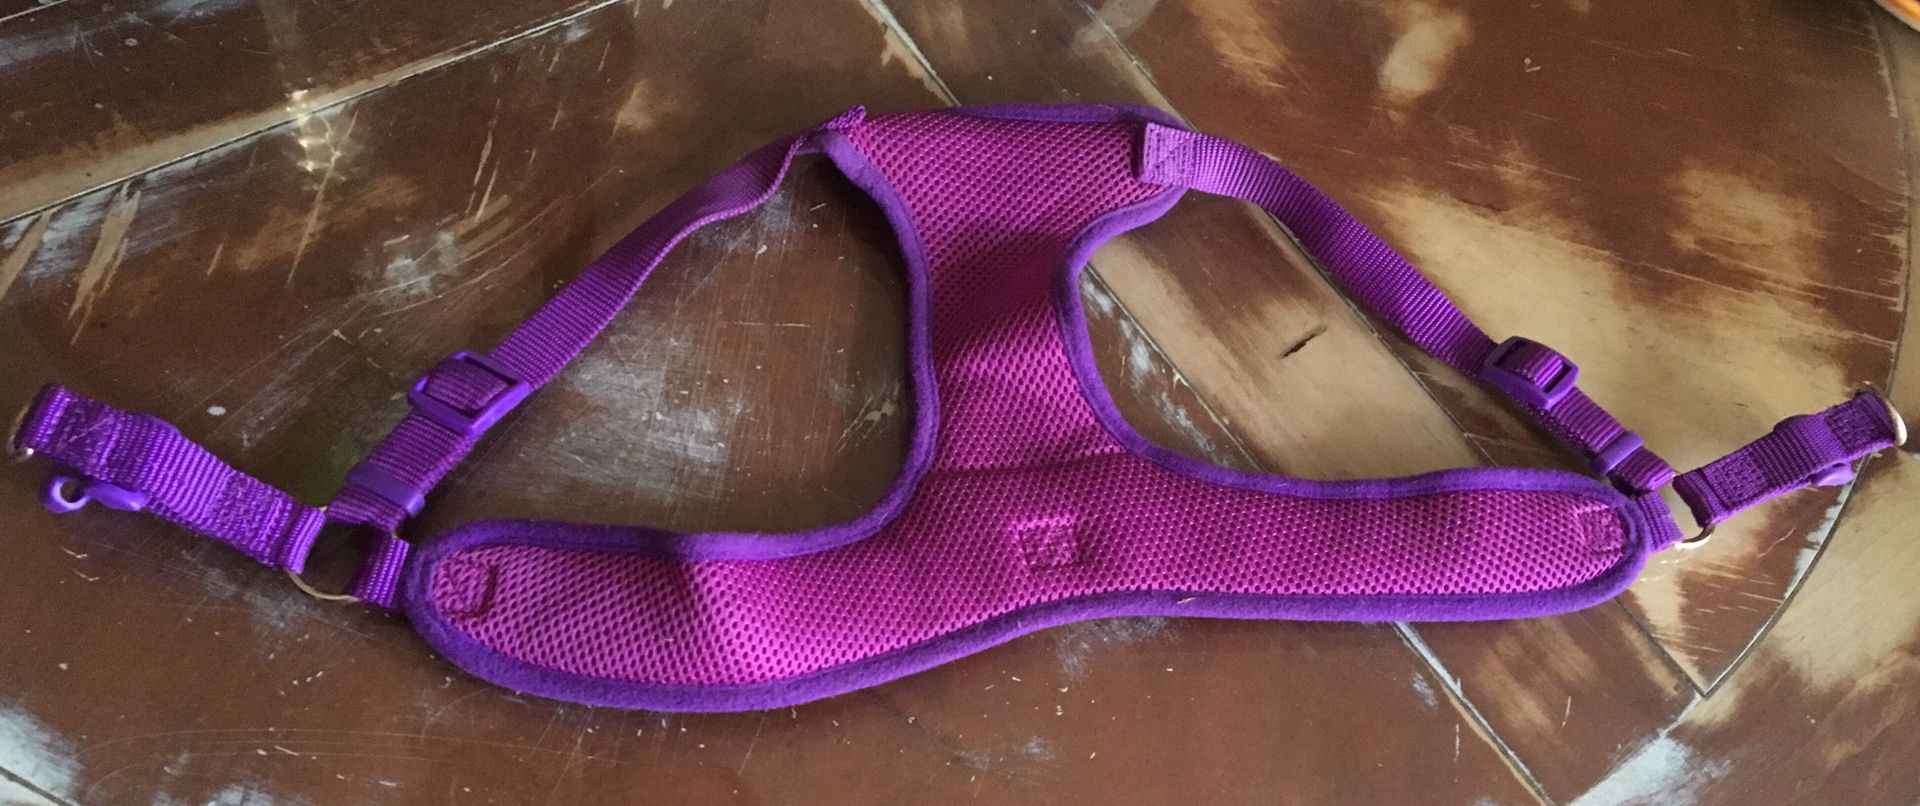 Medium size mesh comfort dog harness in purple